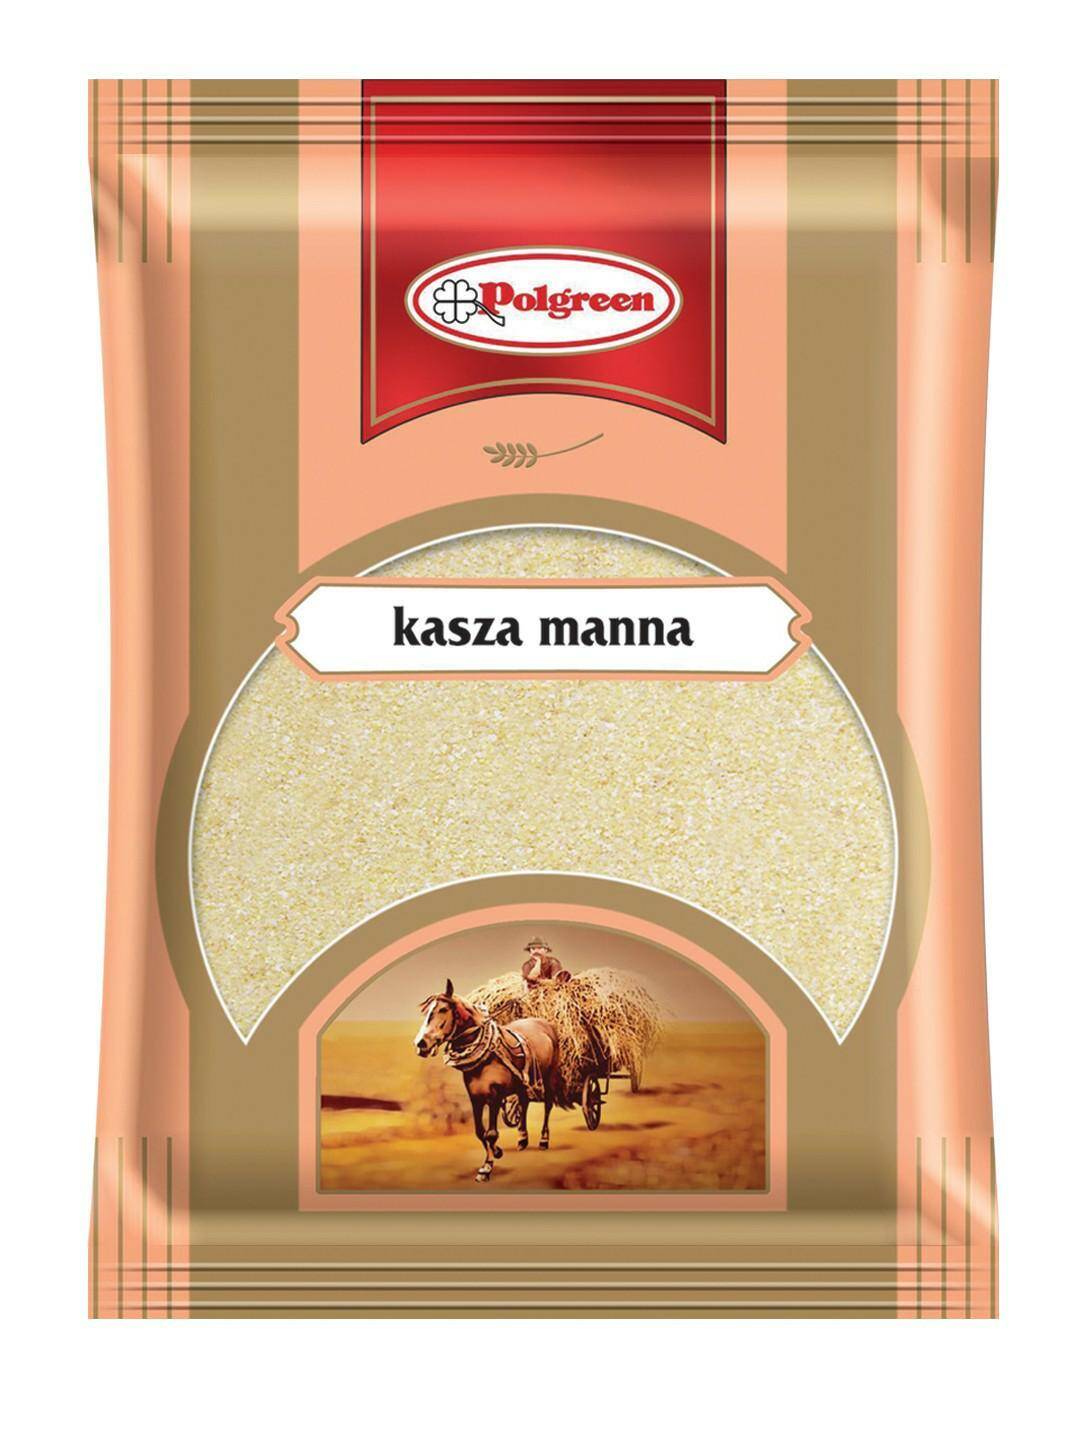 POLGREEN kasza manna 500g*14